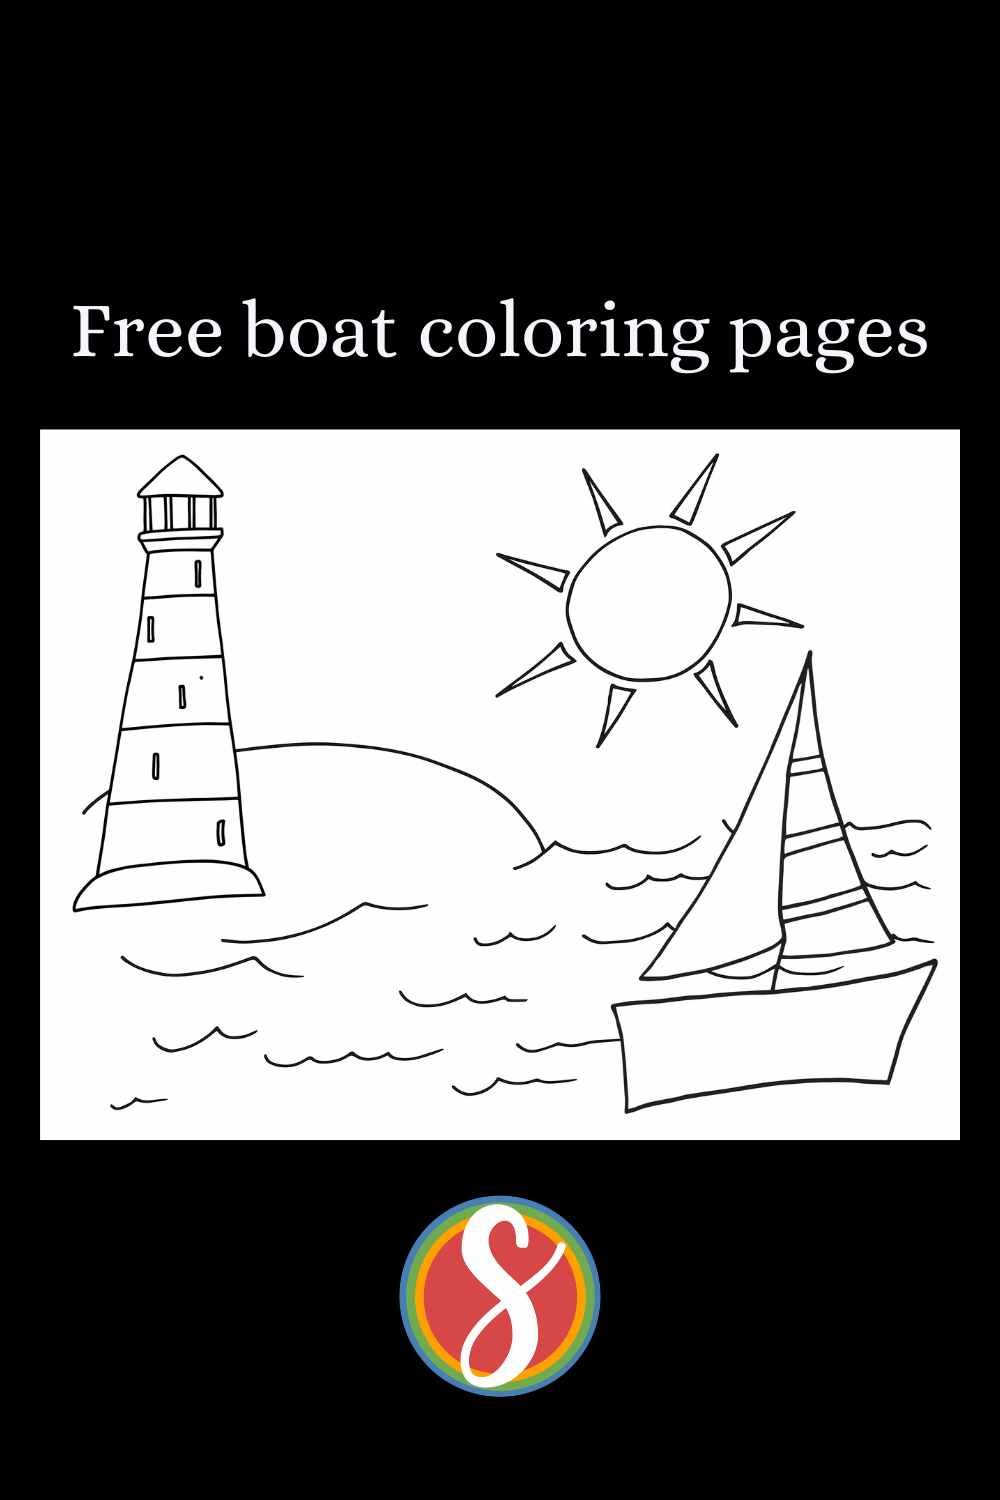 https://images.squarespace-cdn.com/content/v1/5c8eb51aebfc7faf979f7f76/786d90ba-d549-48ed-8806-0417d2bf1d62/free+boat+coloring+pages.jpg